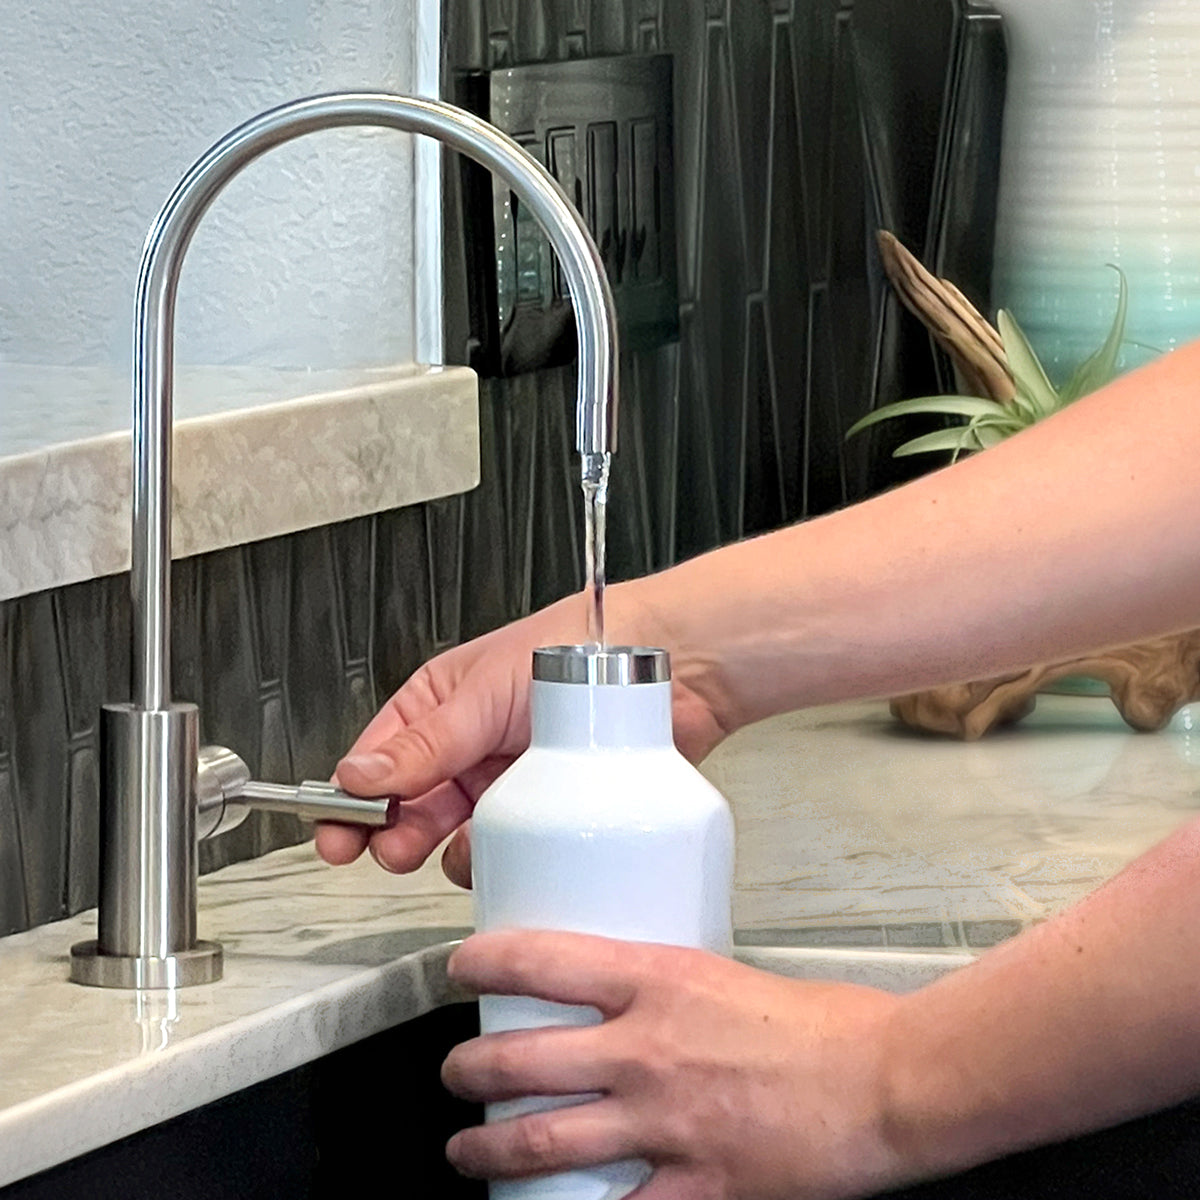 Water Filter for Bathroom Sink, 5 Filter Elements with Transparent Faucet  Mount, KitchenTap Water Filtration System, Reduce Chlorine, Tasting  Filtered